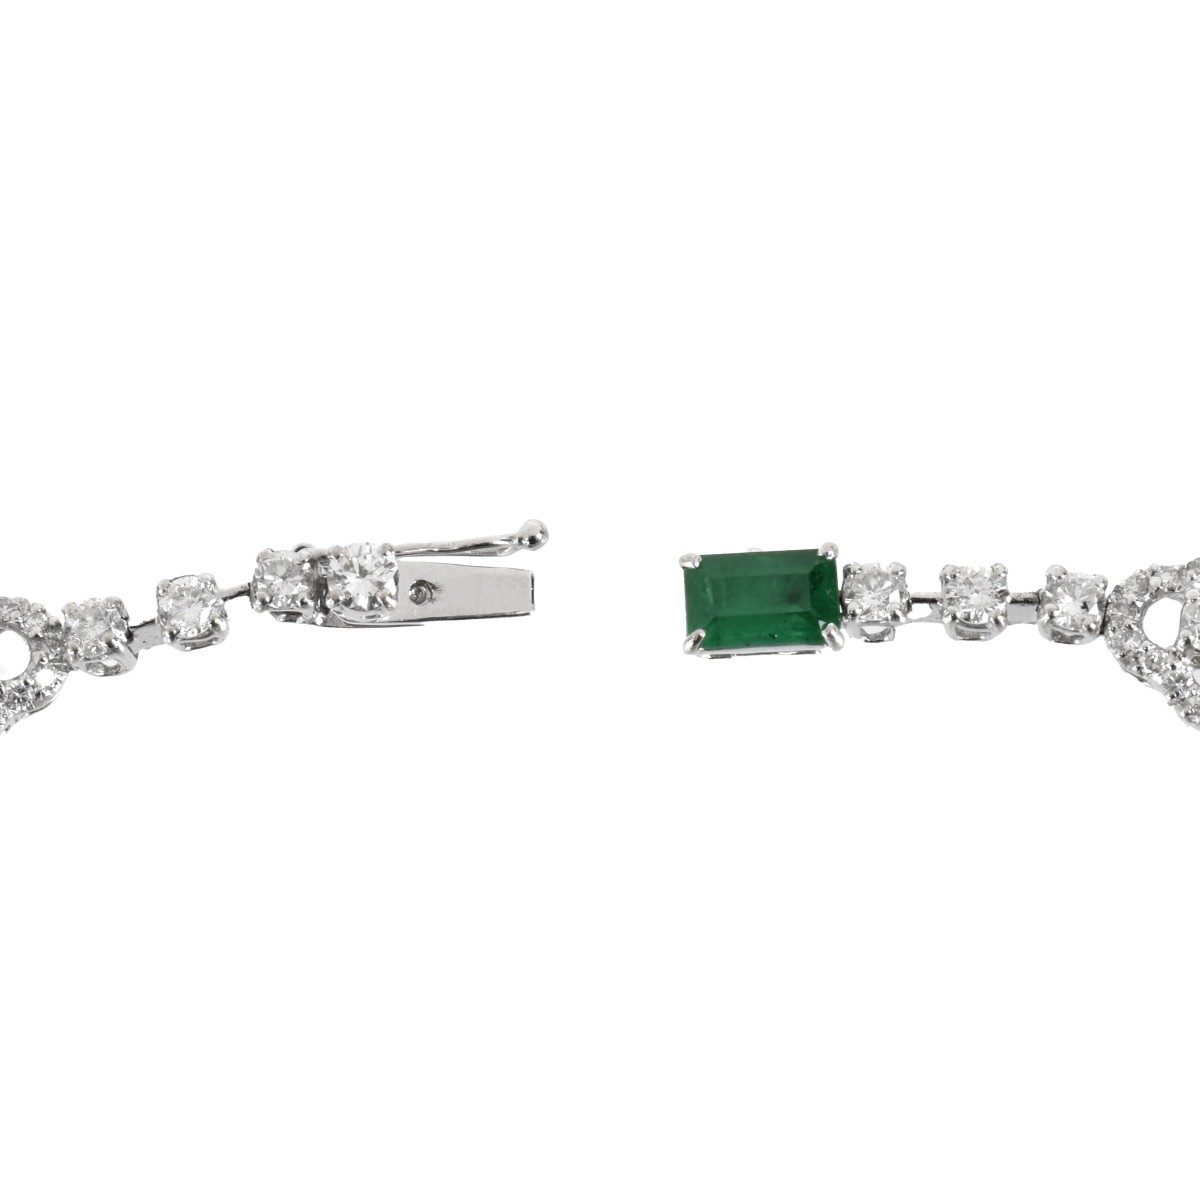 Emerald, Diamond and 18K Necklace